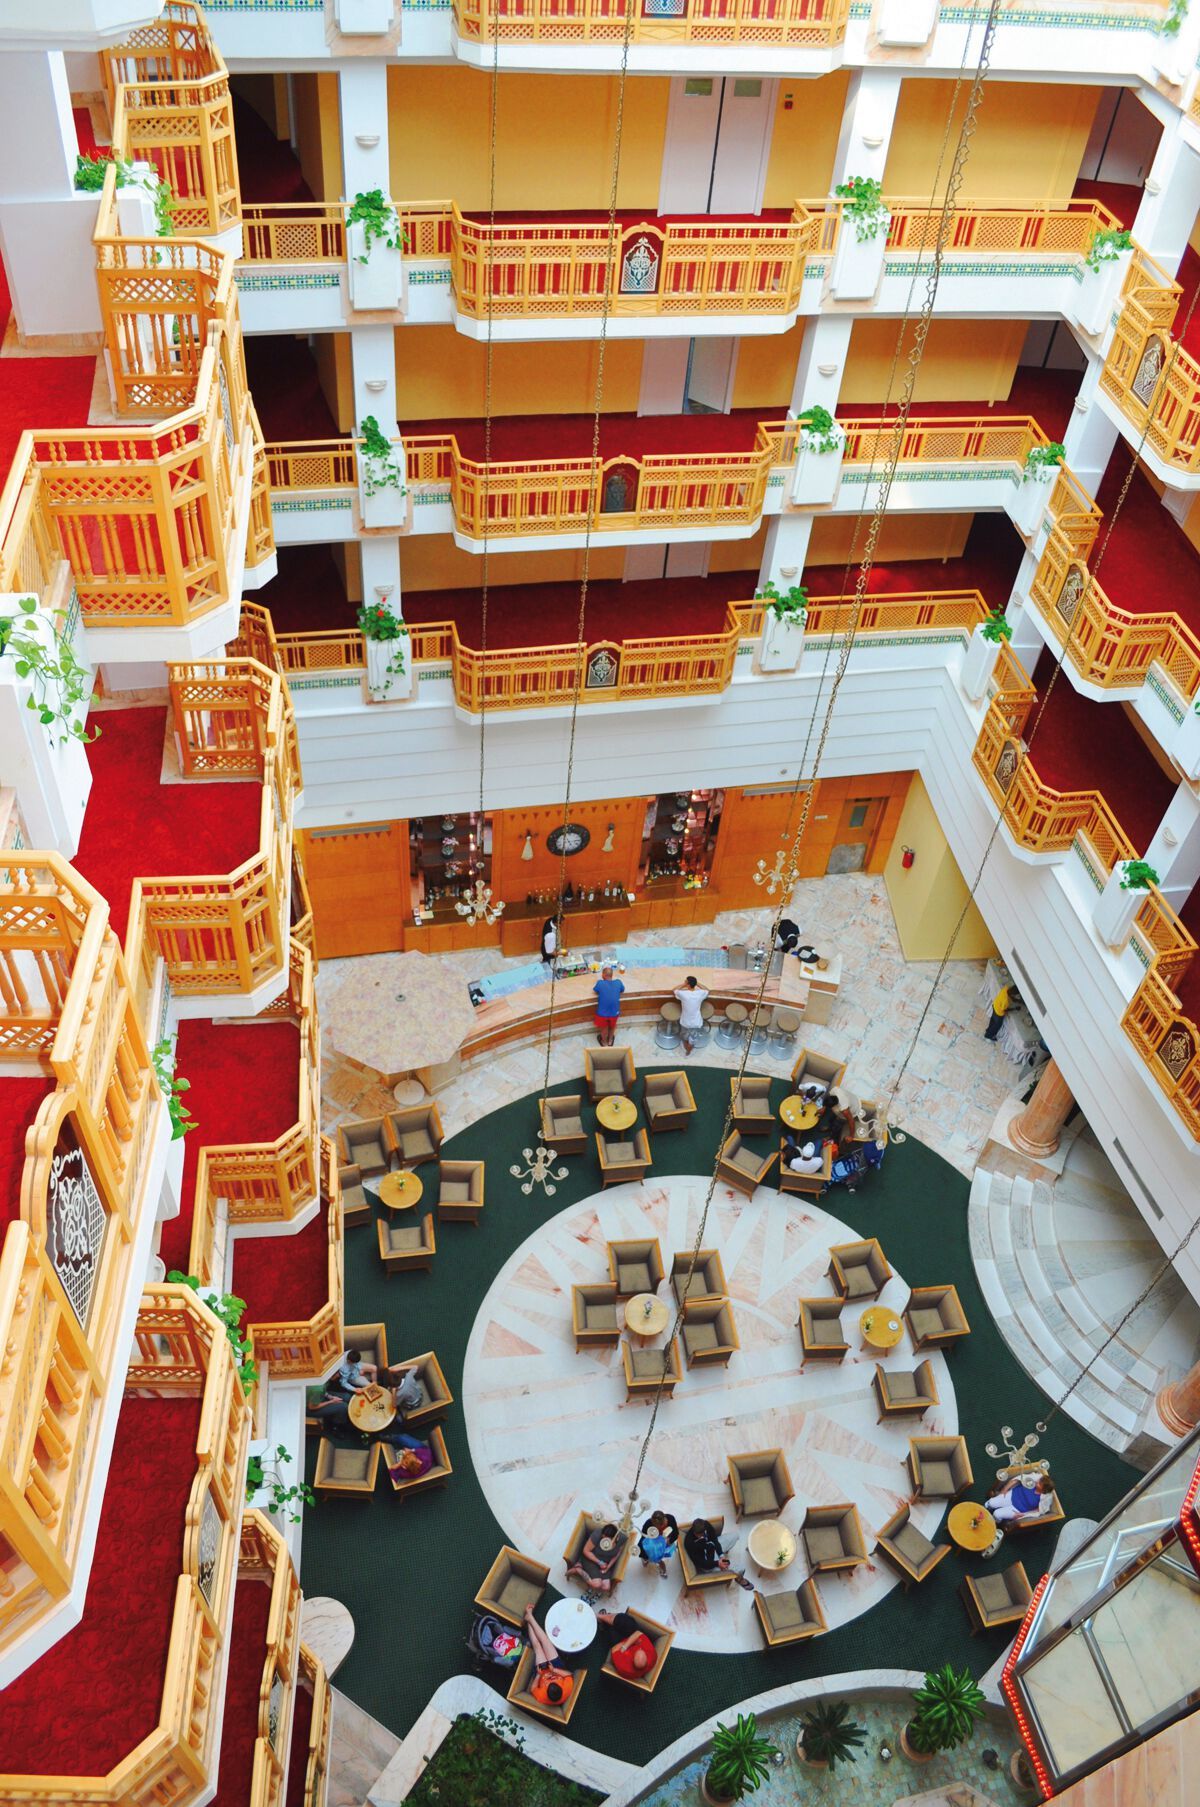 Tunisie - Hôtel Marhaba Royal Salem 4*